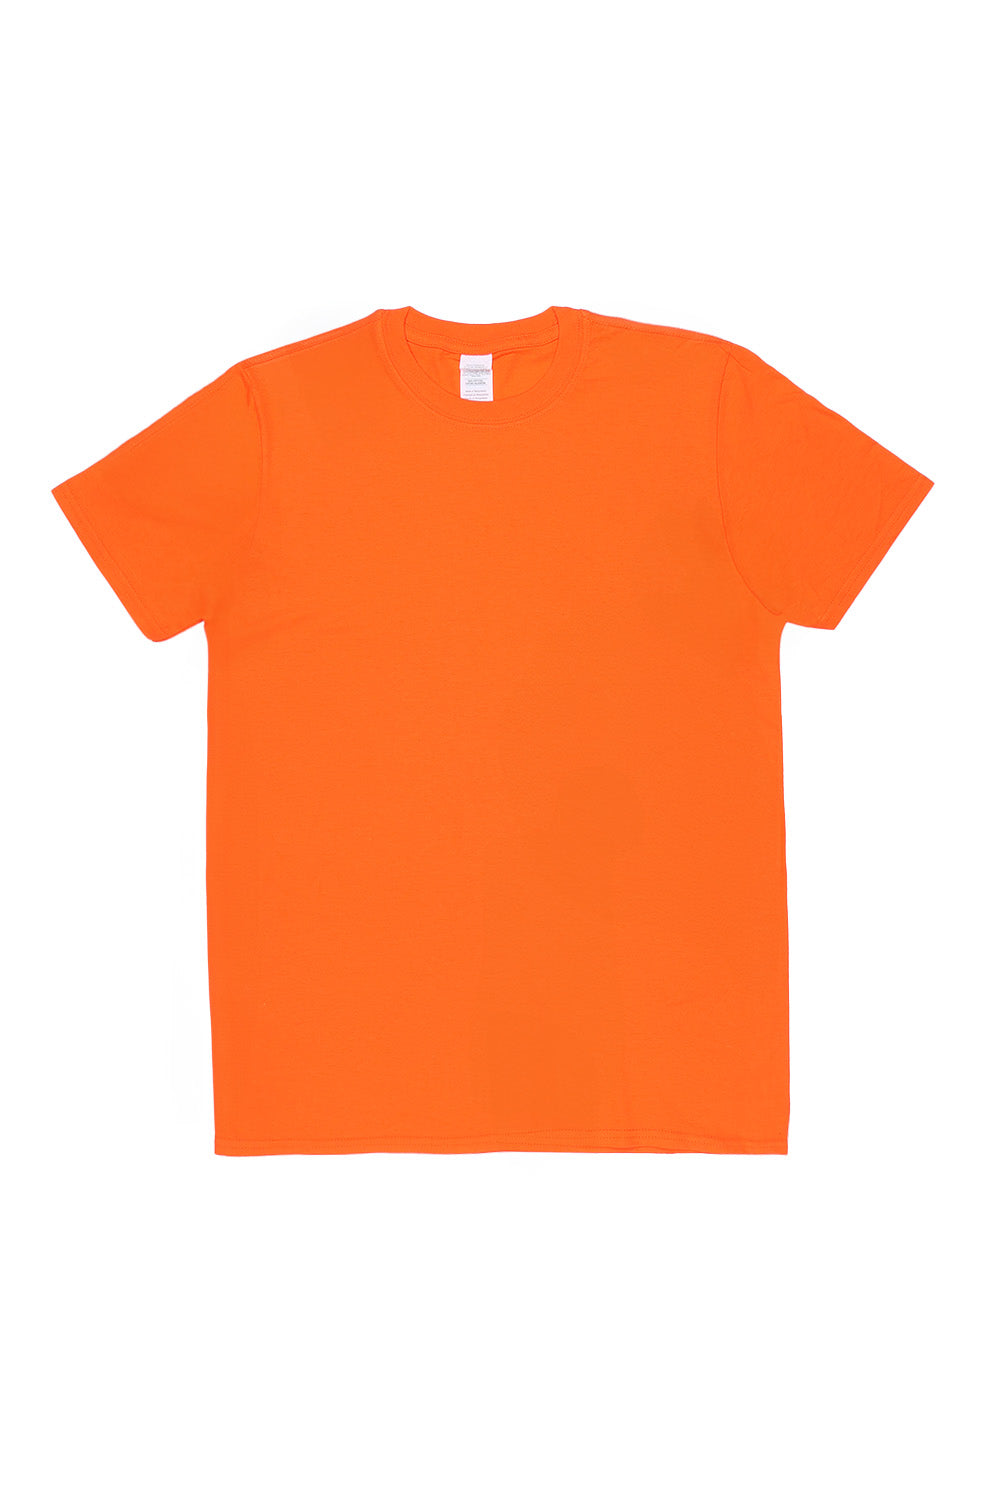 Softstyle Plain T-Shirt in Orange (Custom Pack)